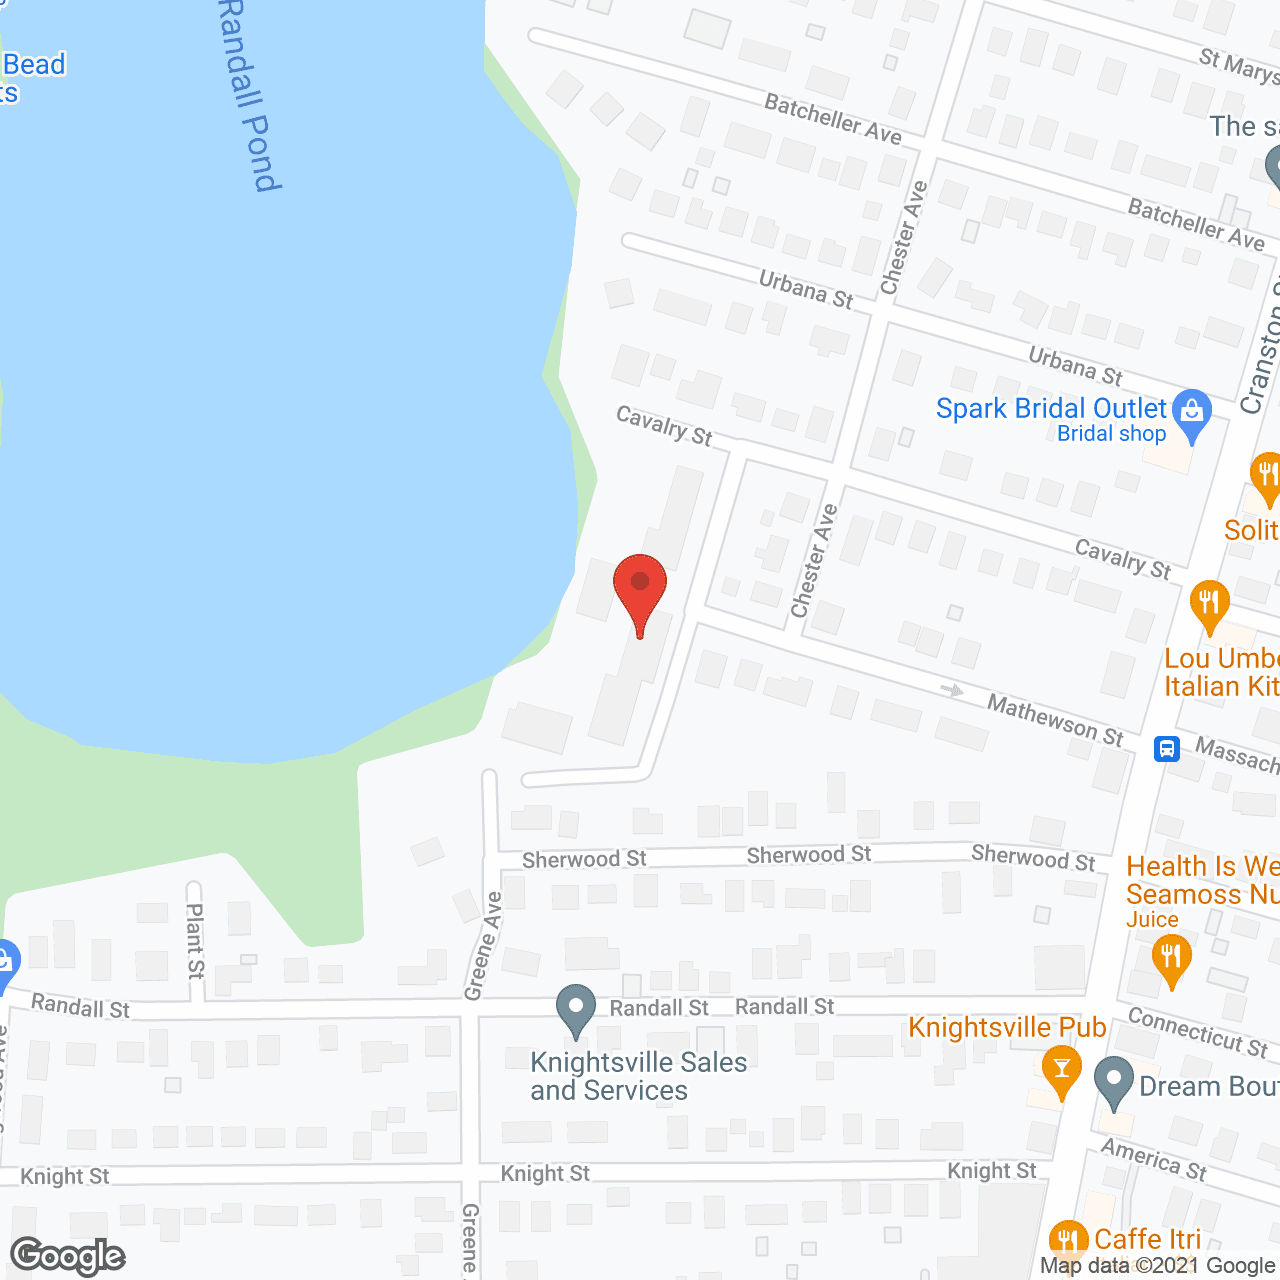 Randall Manor in google map